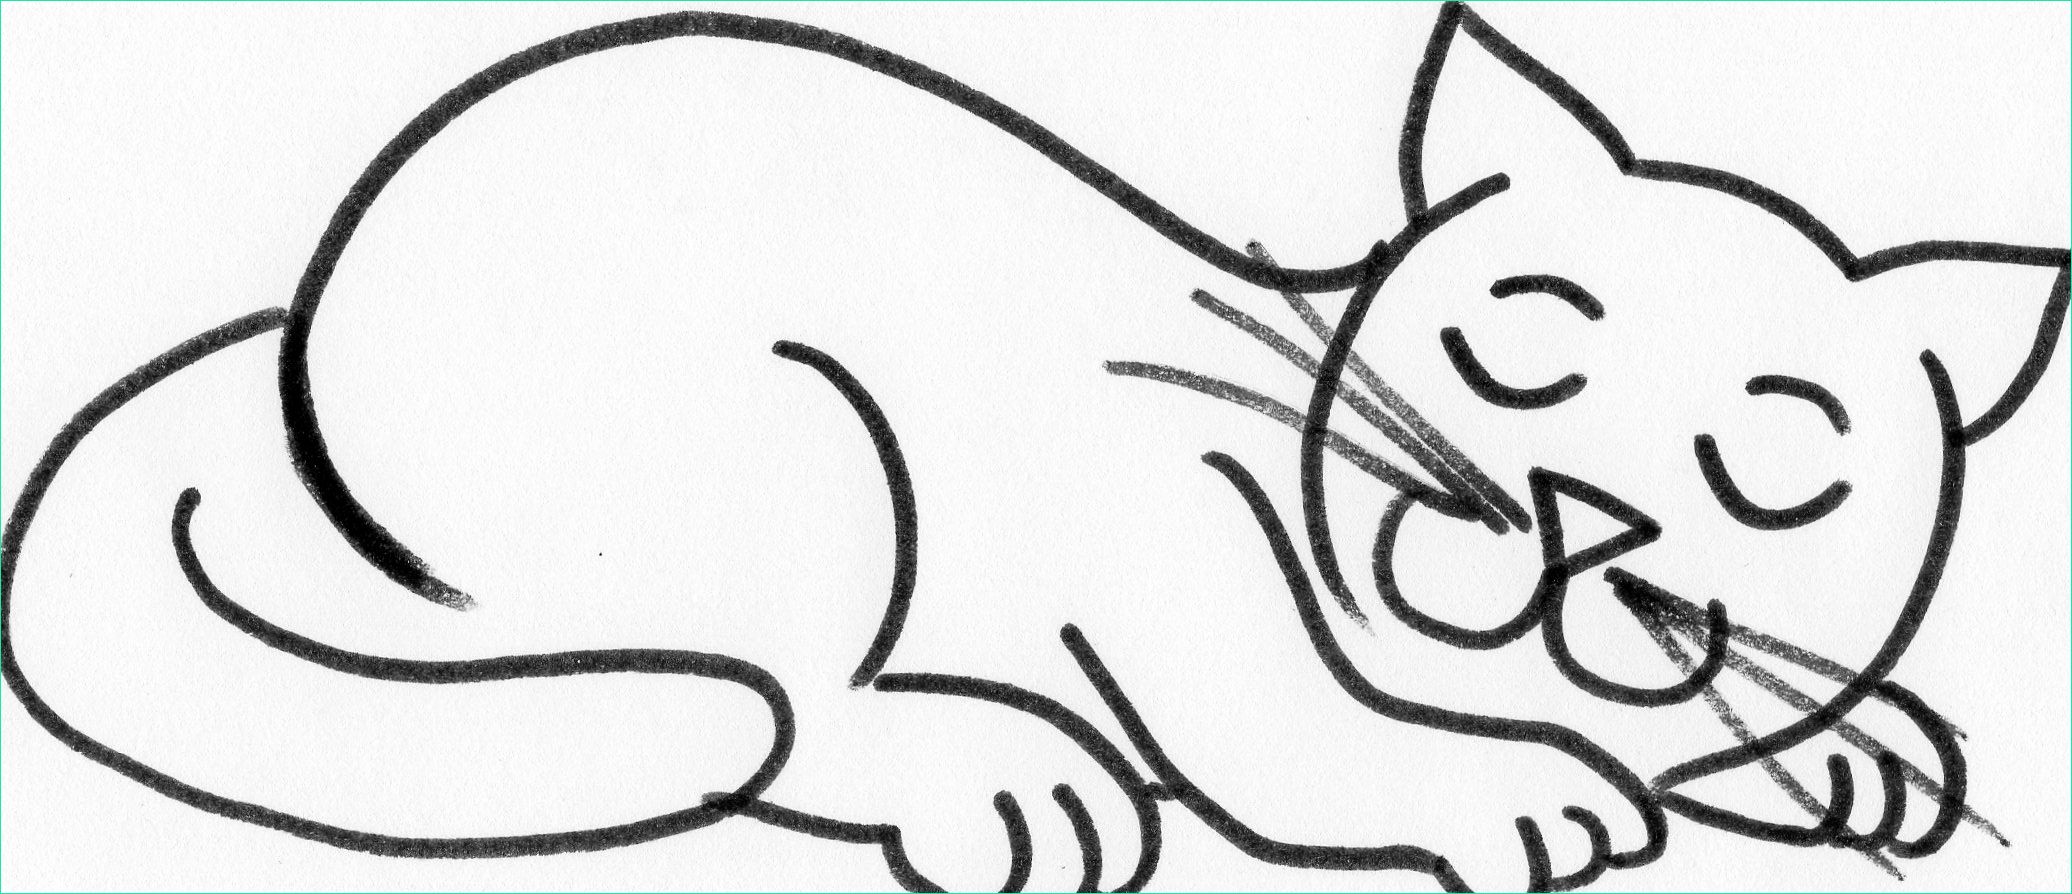 ment dessiner un chat